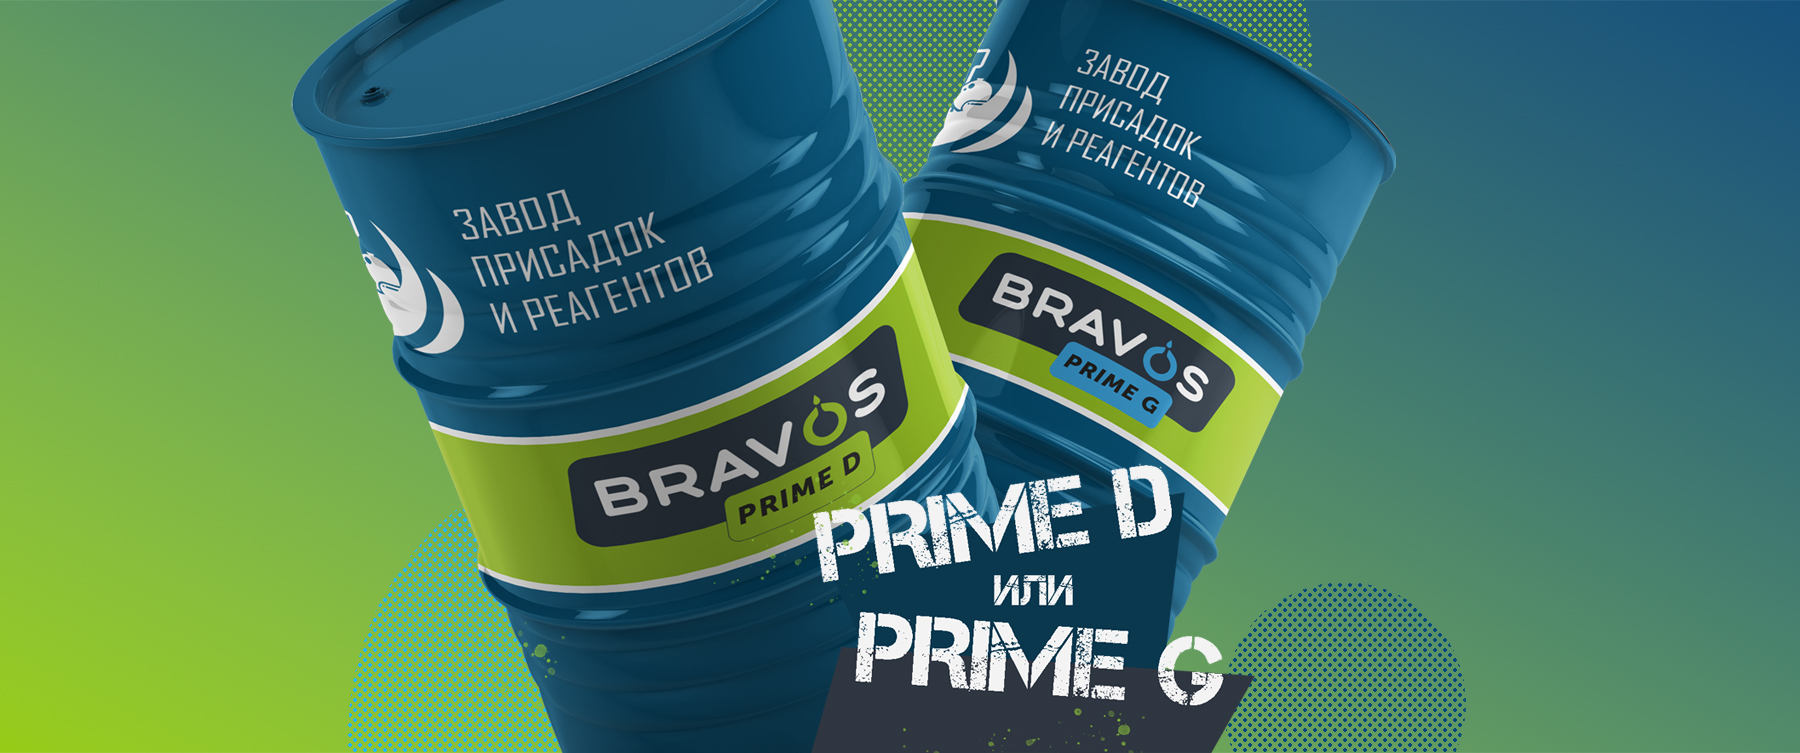 BRAVOS PRIME D или BRAVOS PRIME G?